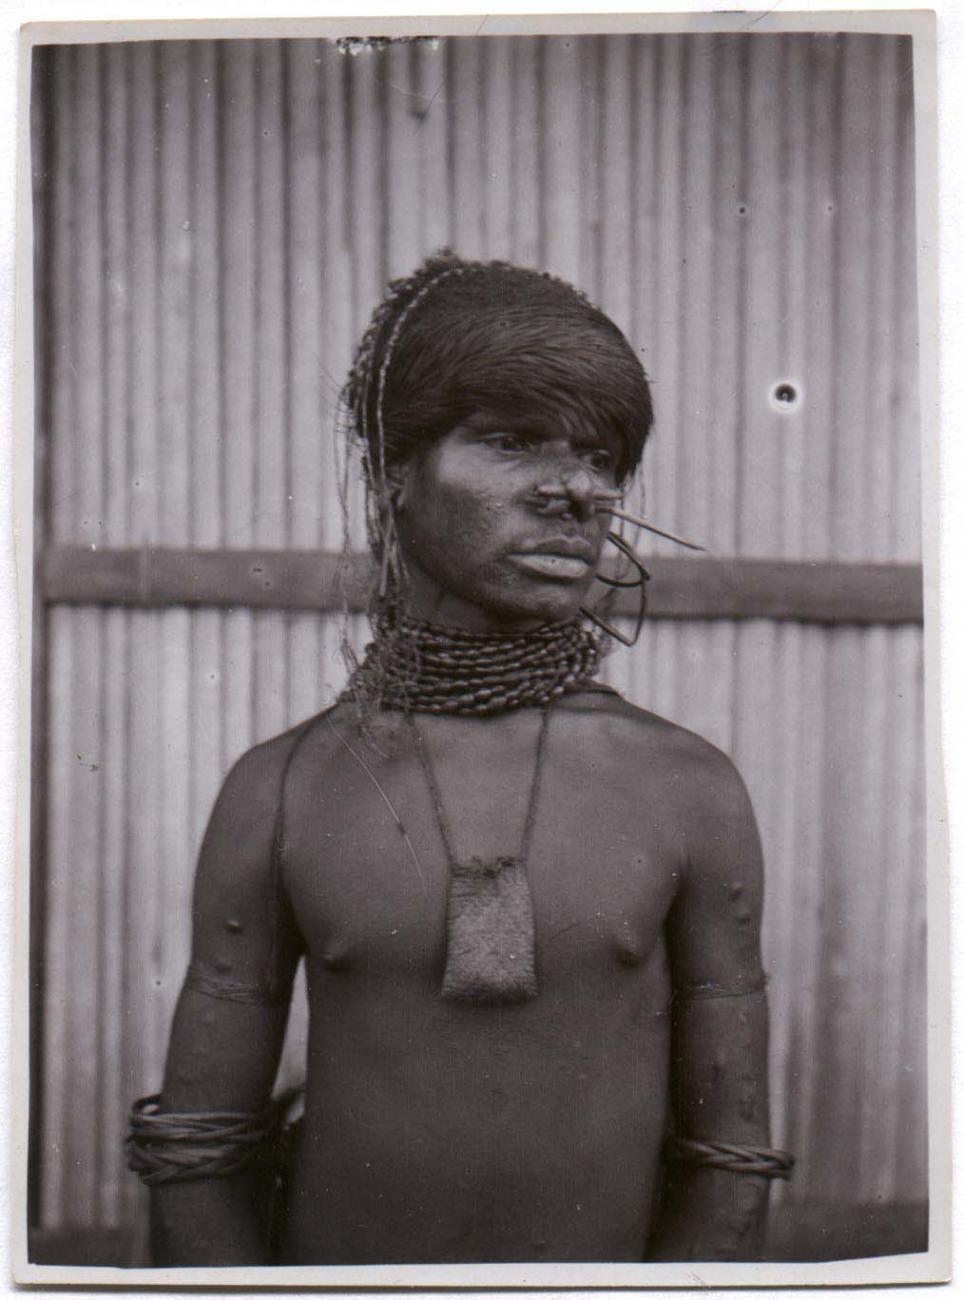 BD/38/6 - 
Man van West-Papua.
